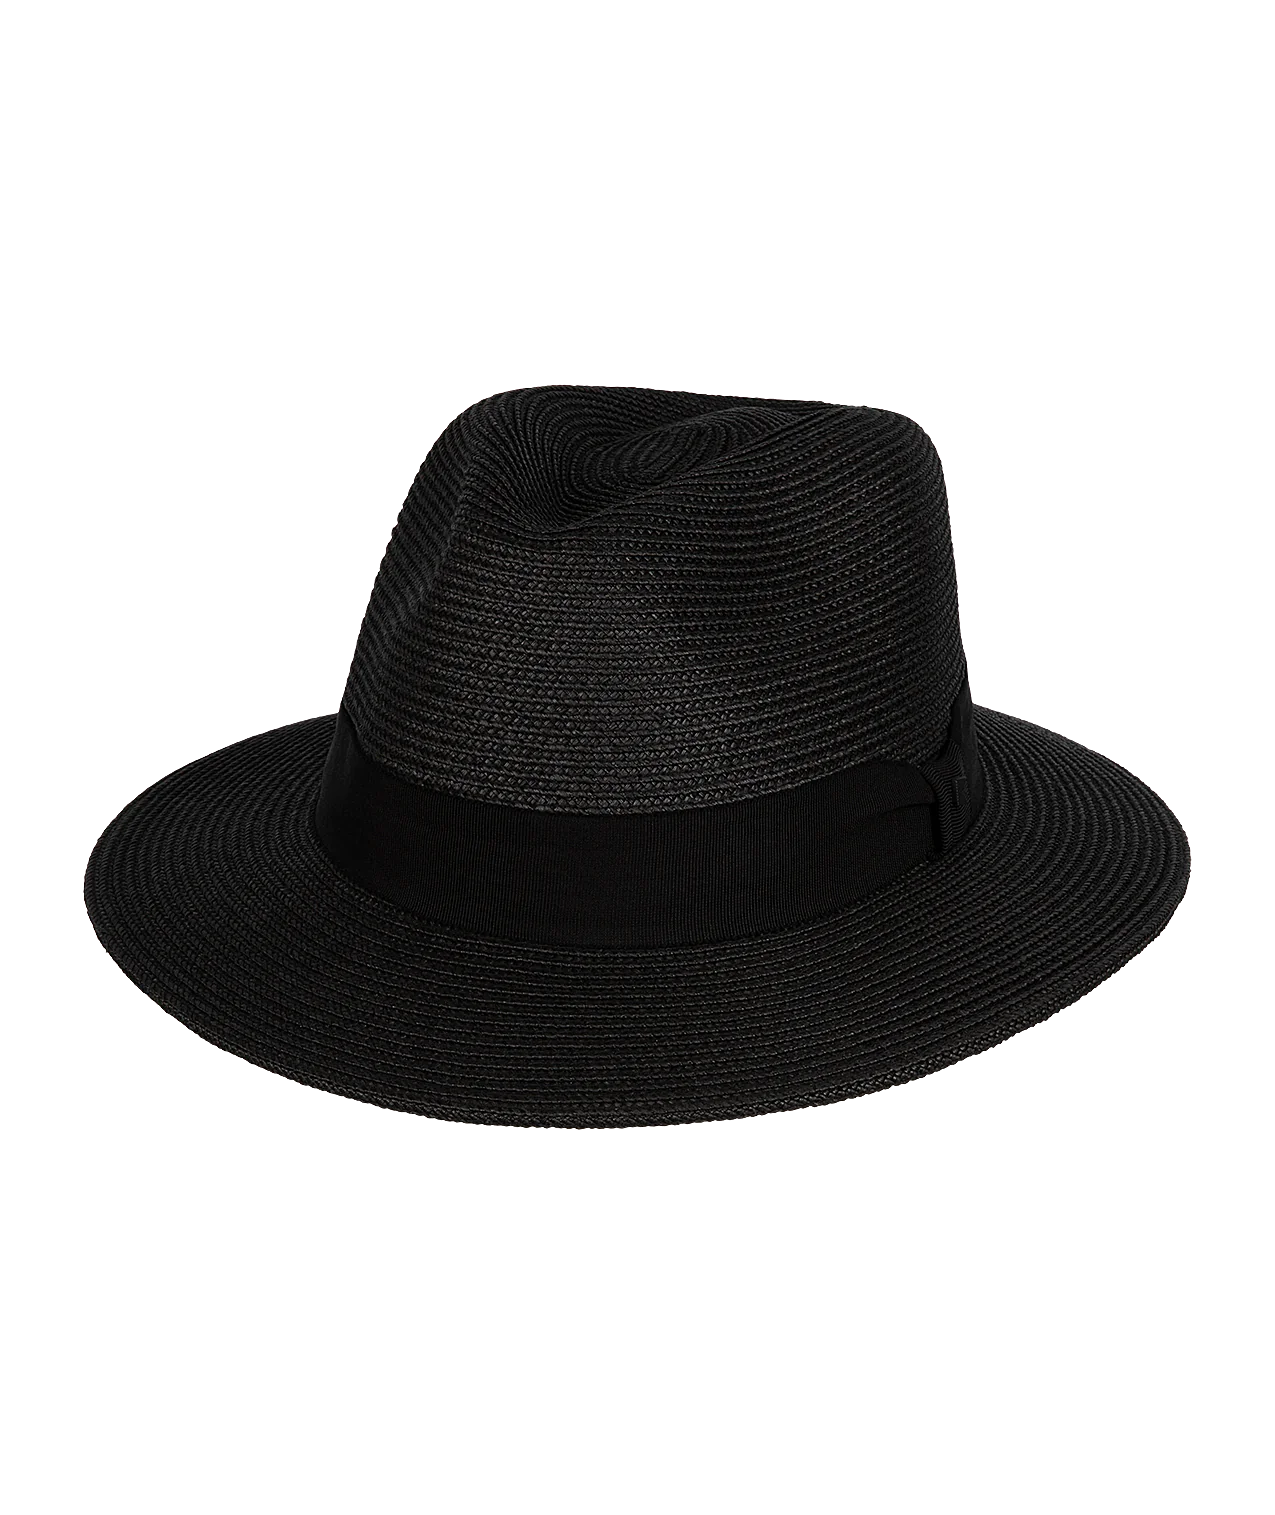 Kooringal Cypress Safari Hat, Style #HSU-0271